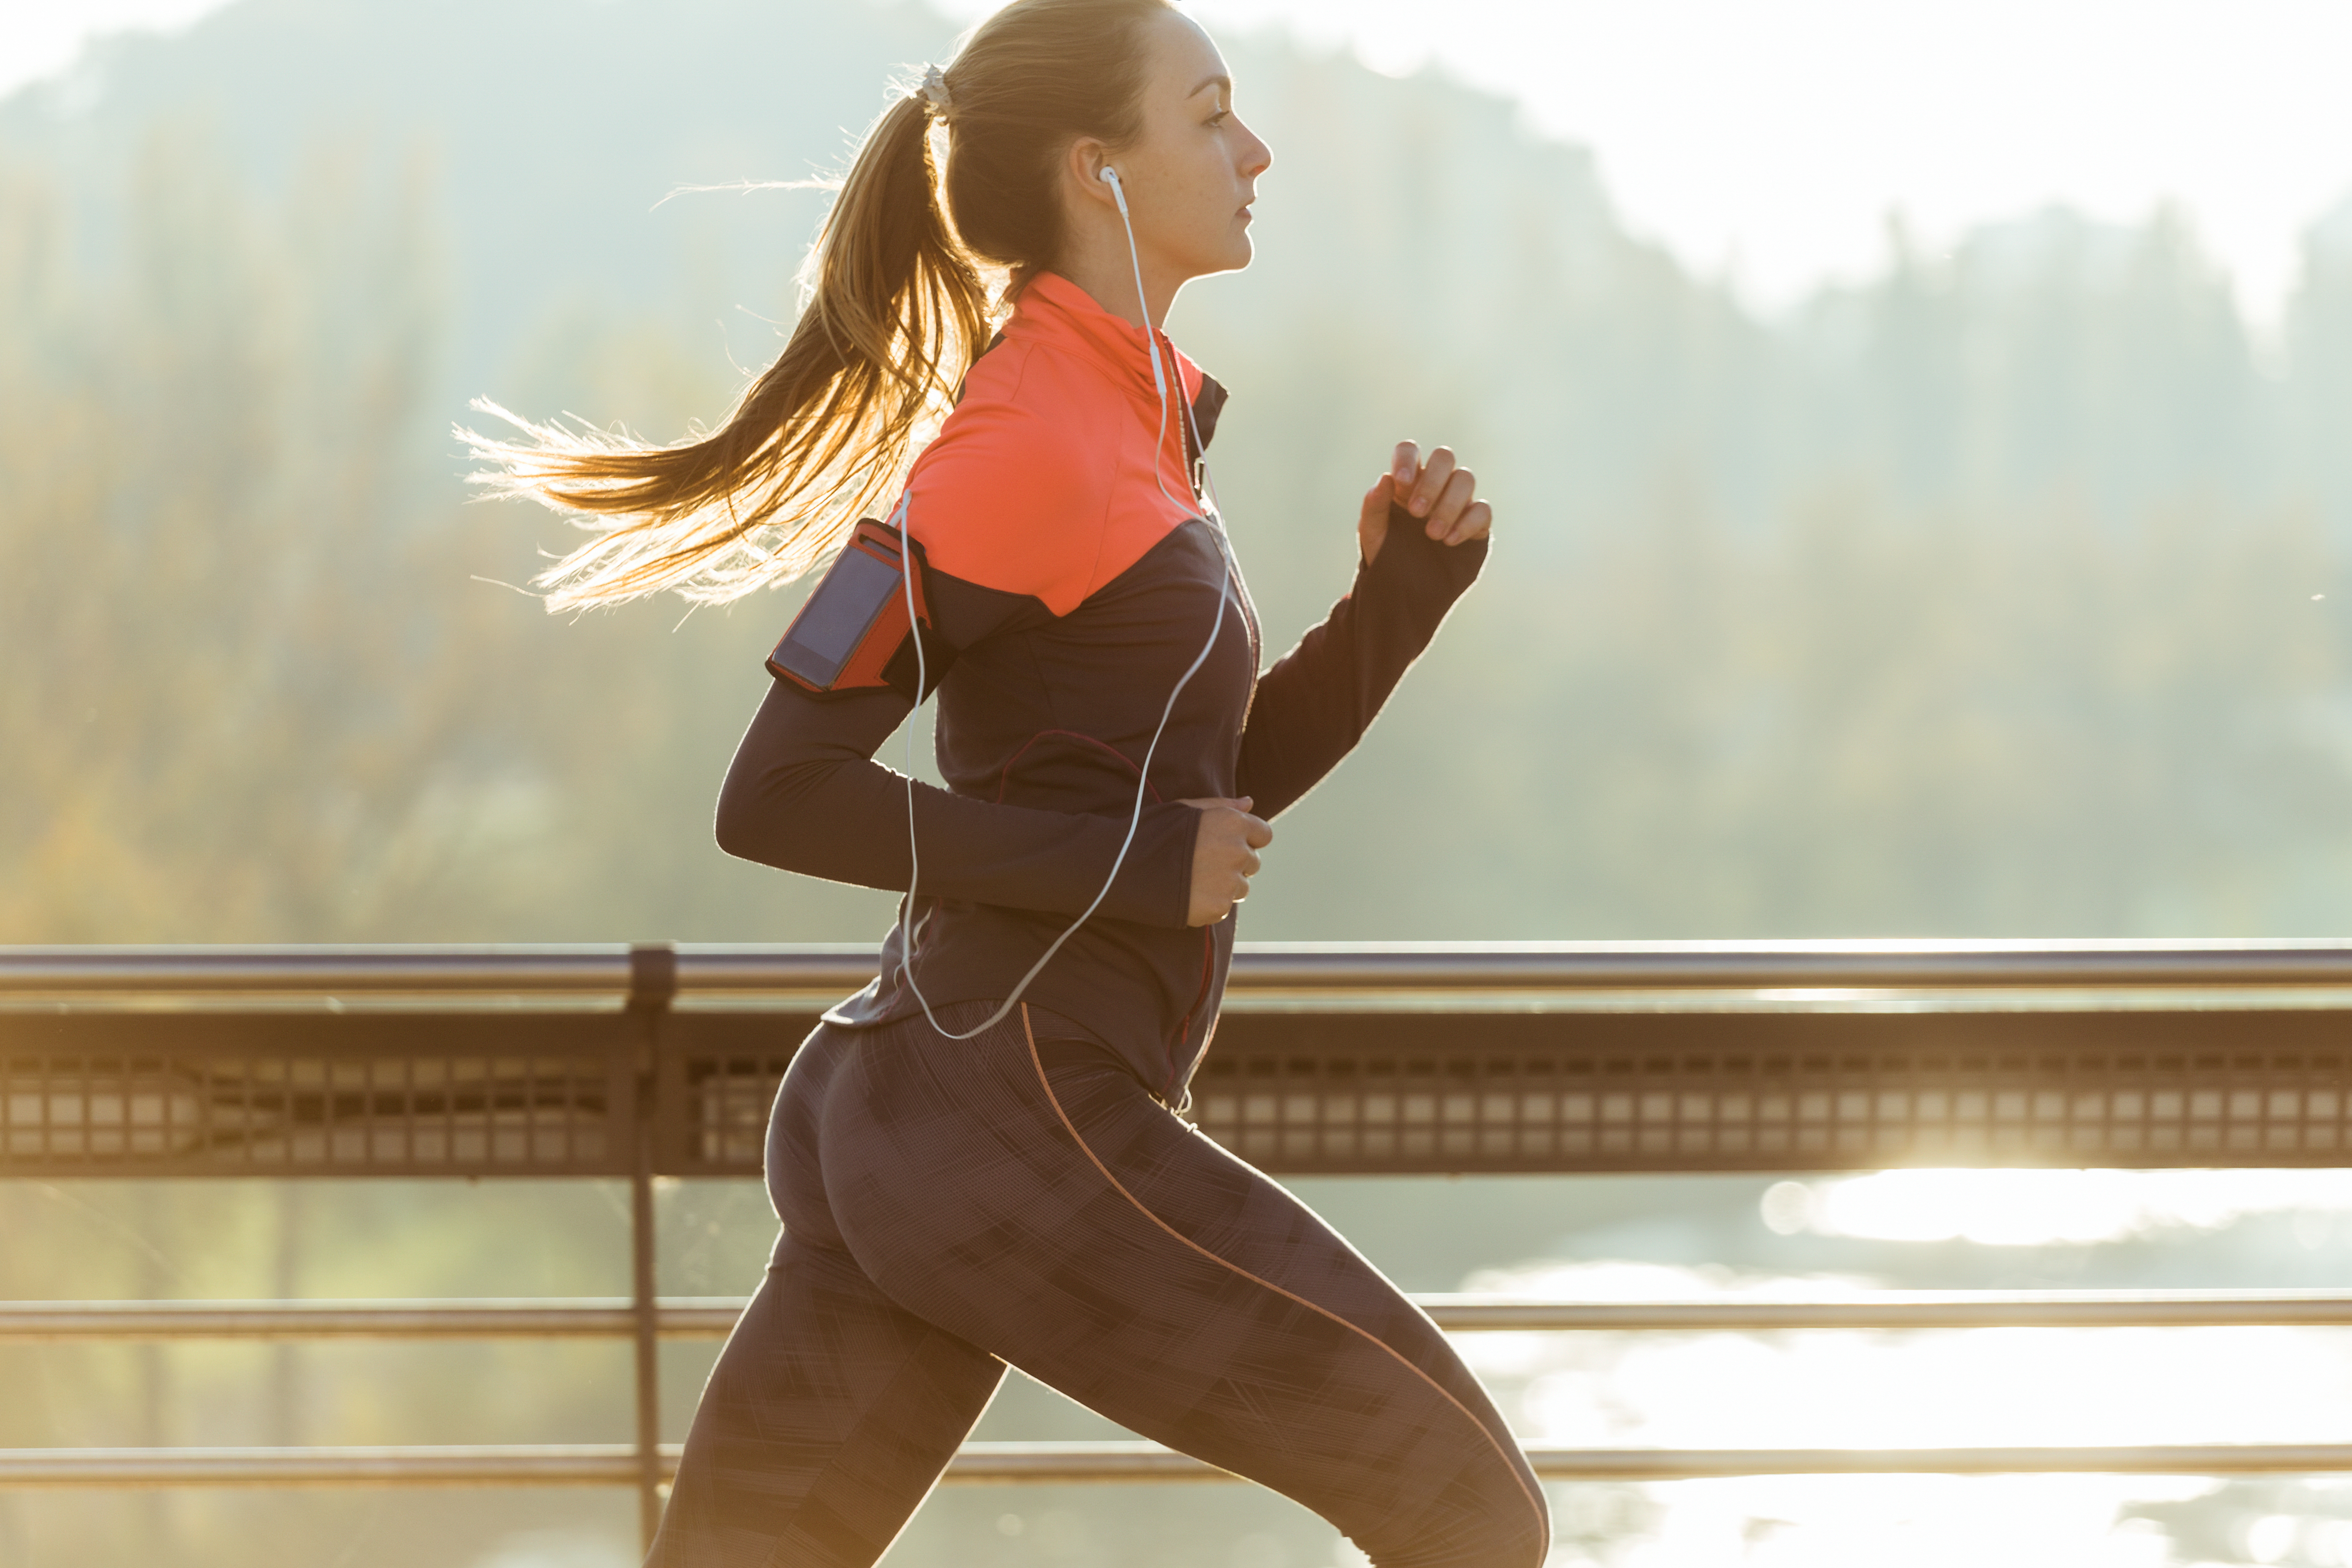 Brazalete Funda Para Celular Running Salir a Correr Caminar y mas